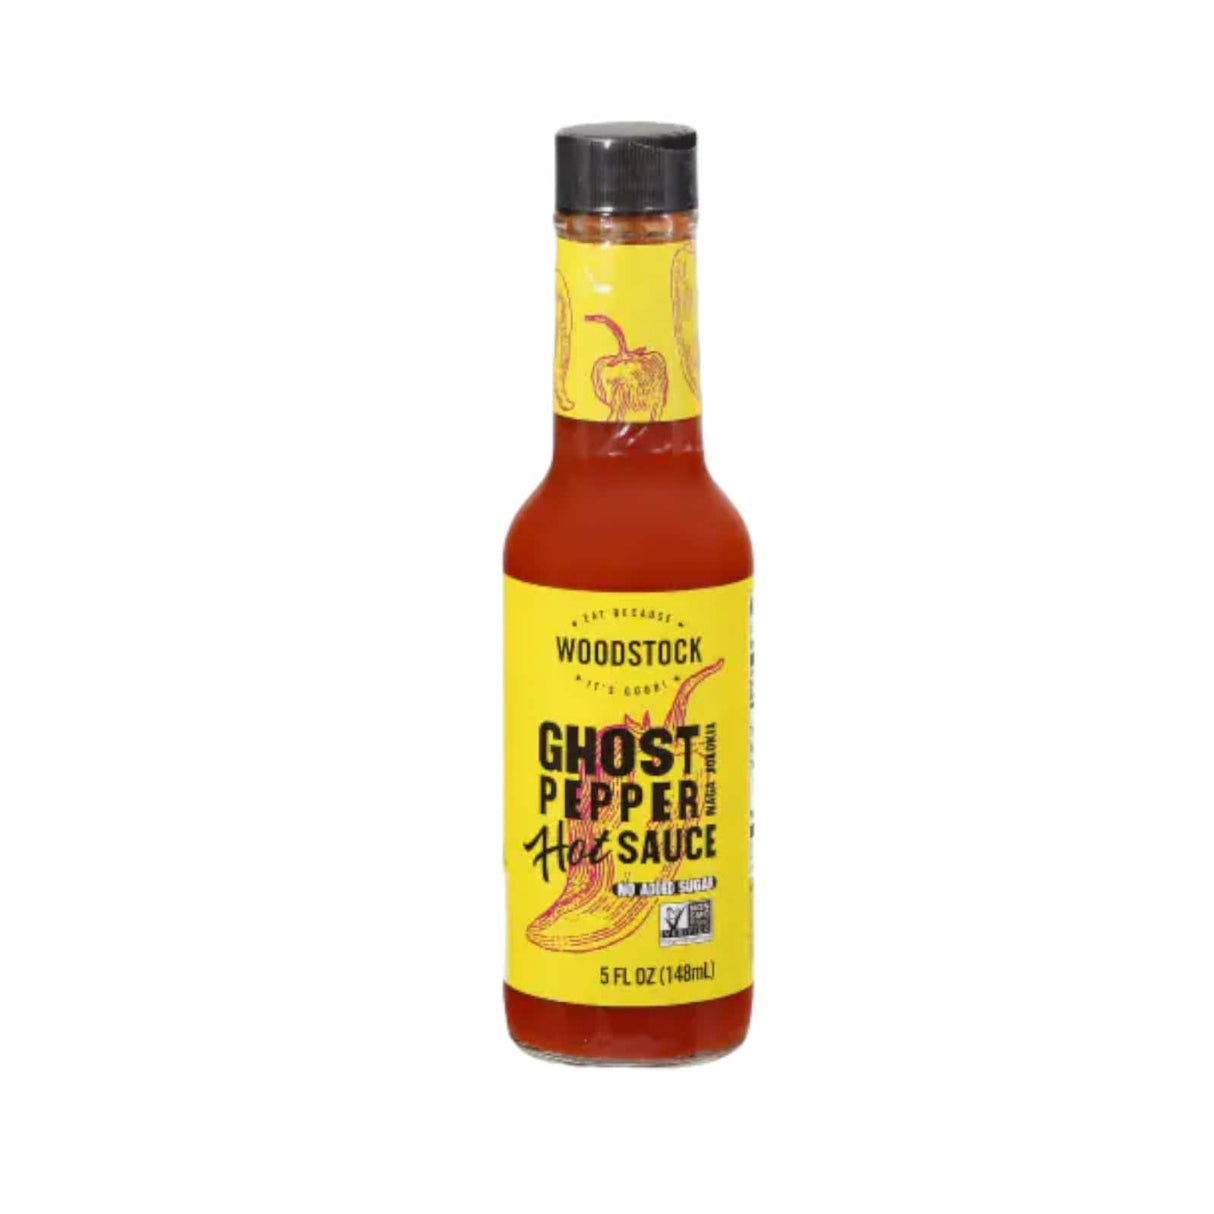 Woodstock Ghost Pepper Hot Sauce